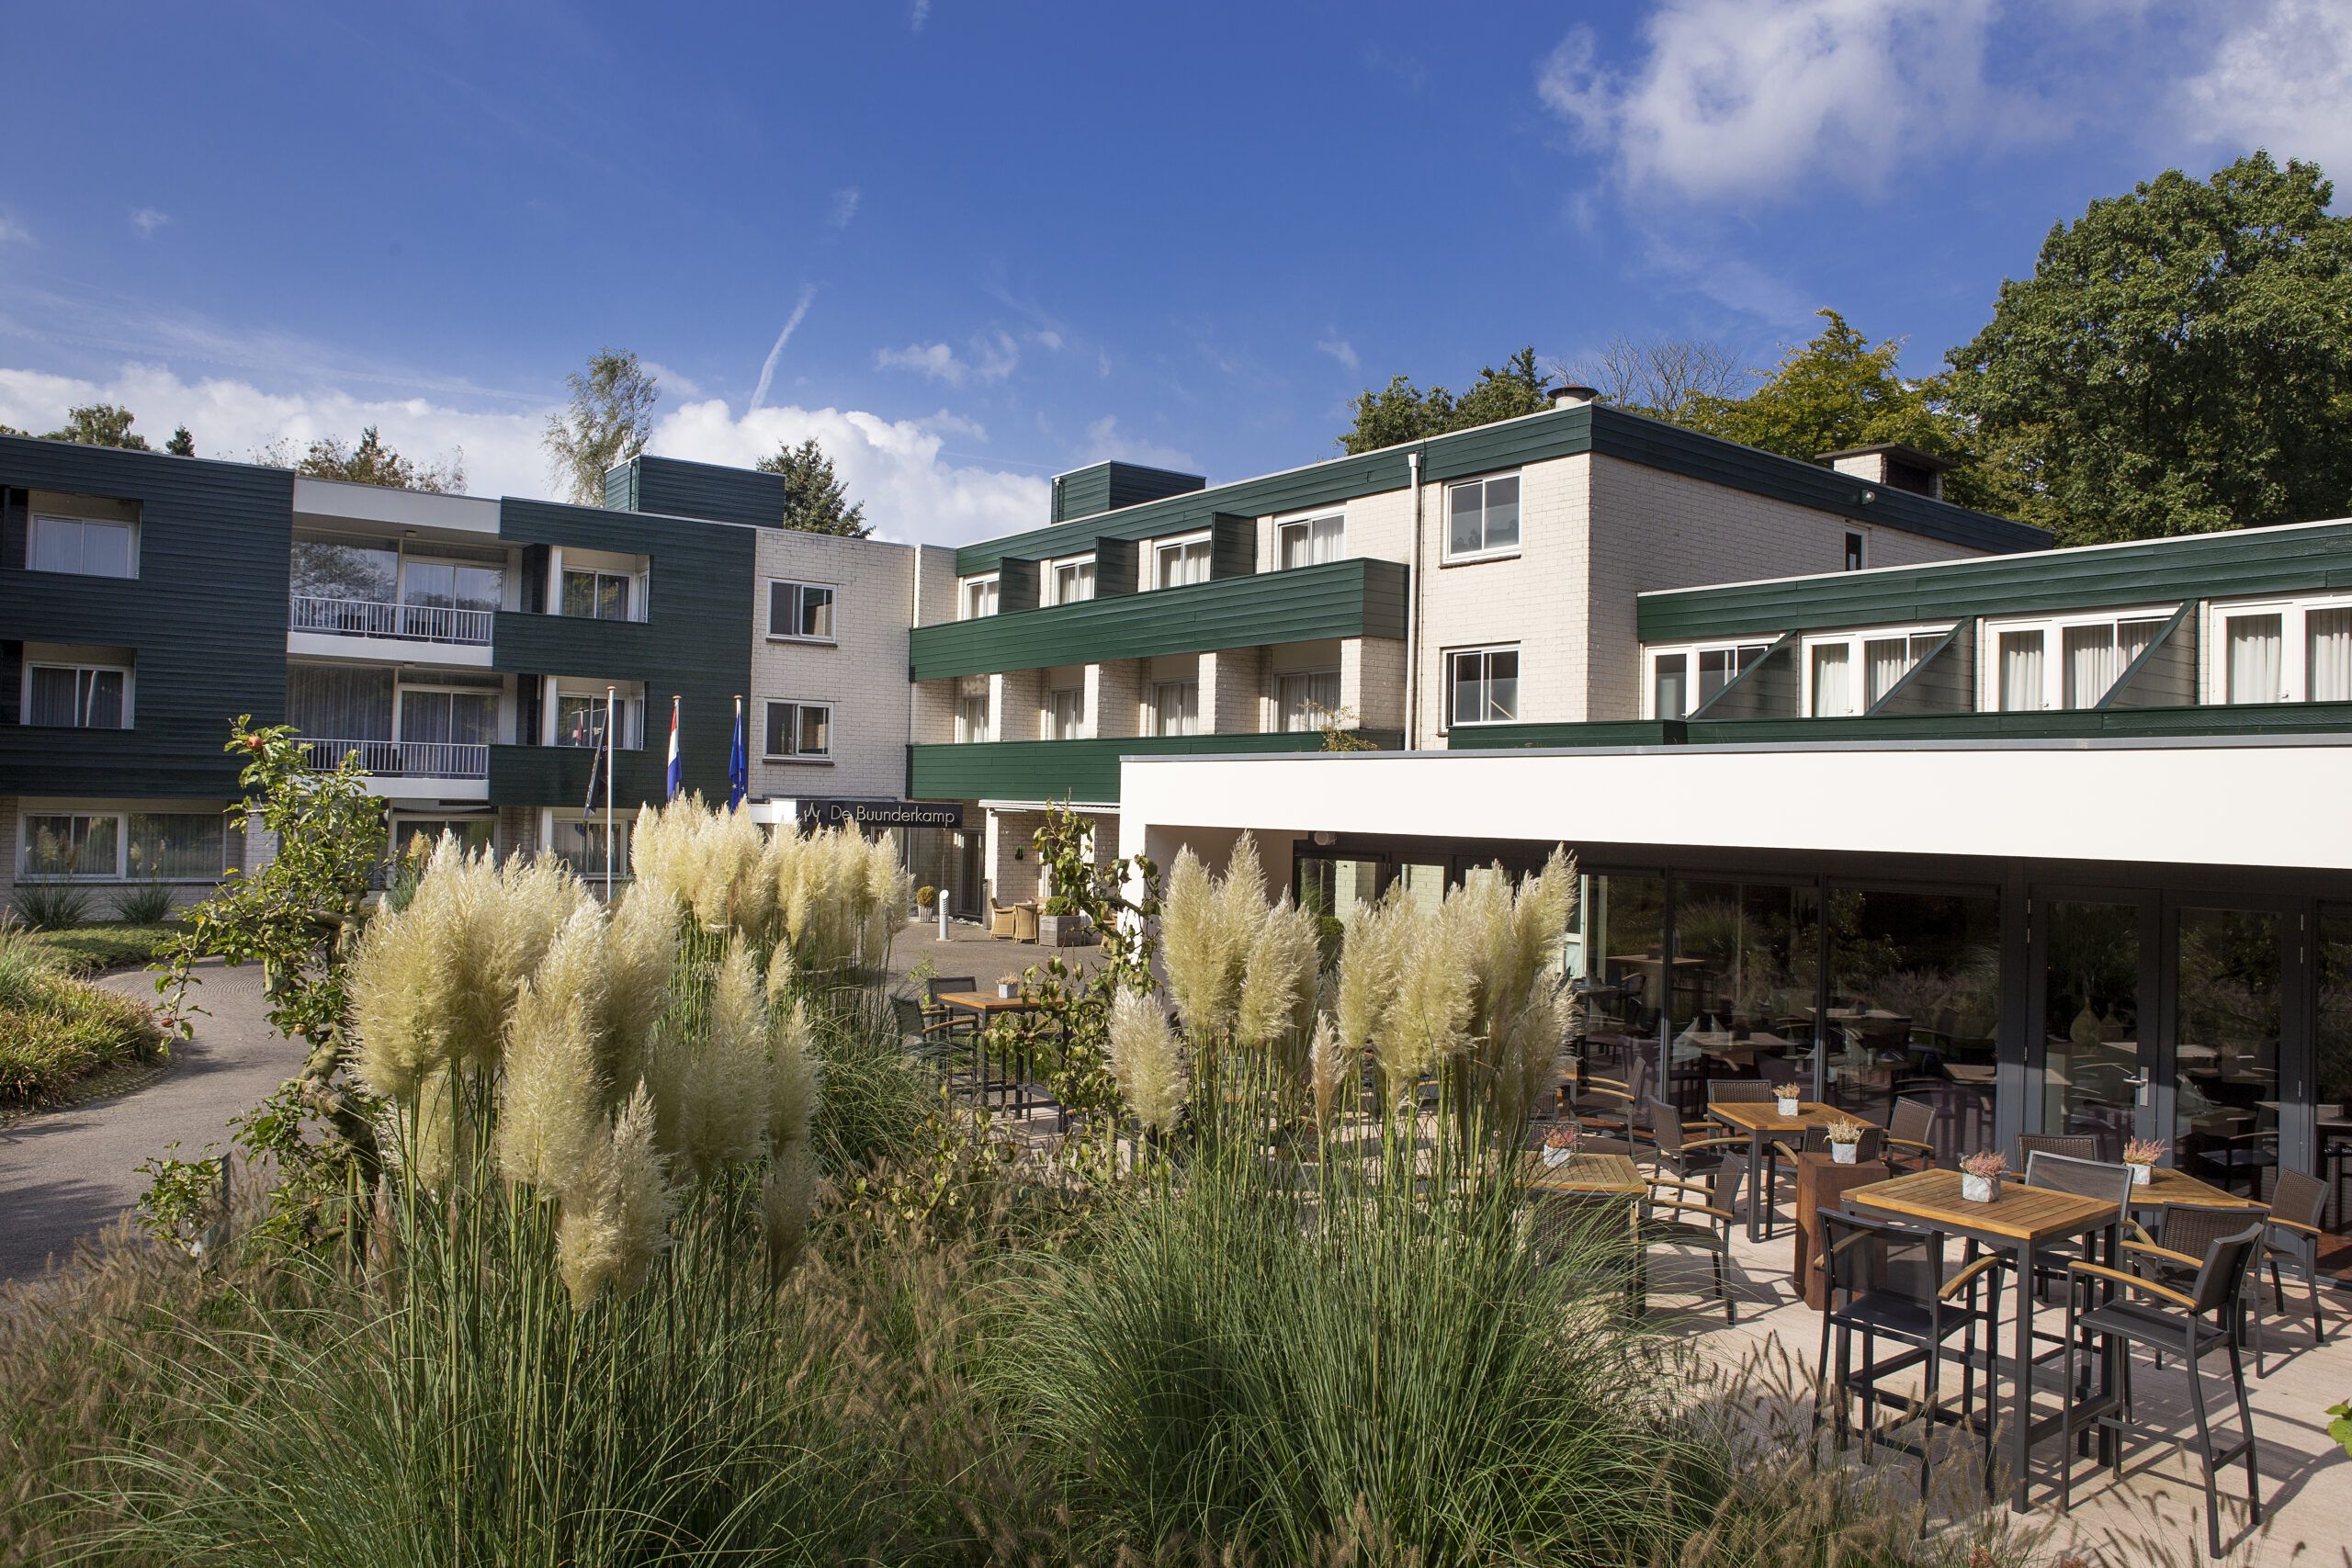 Fletcher Hotel-Restaurant de Buunderkamp - Wolfheze - Nederland